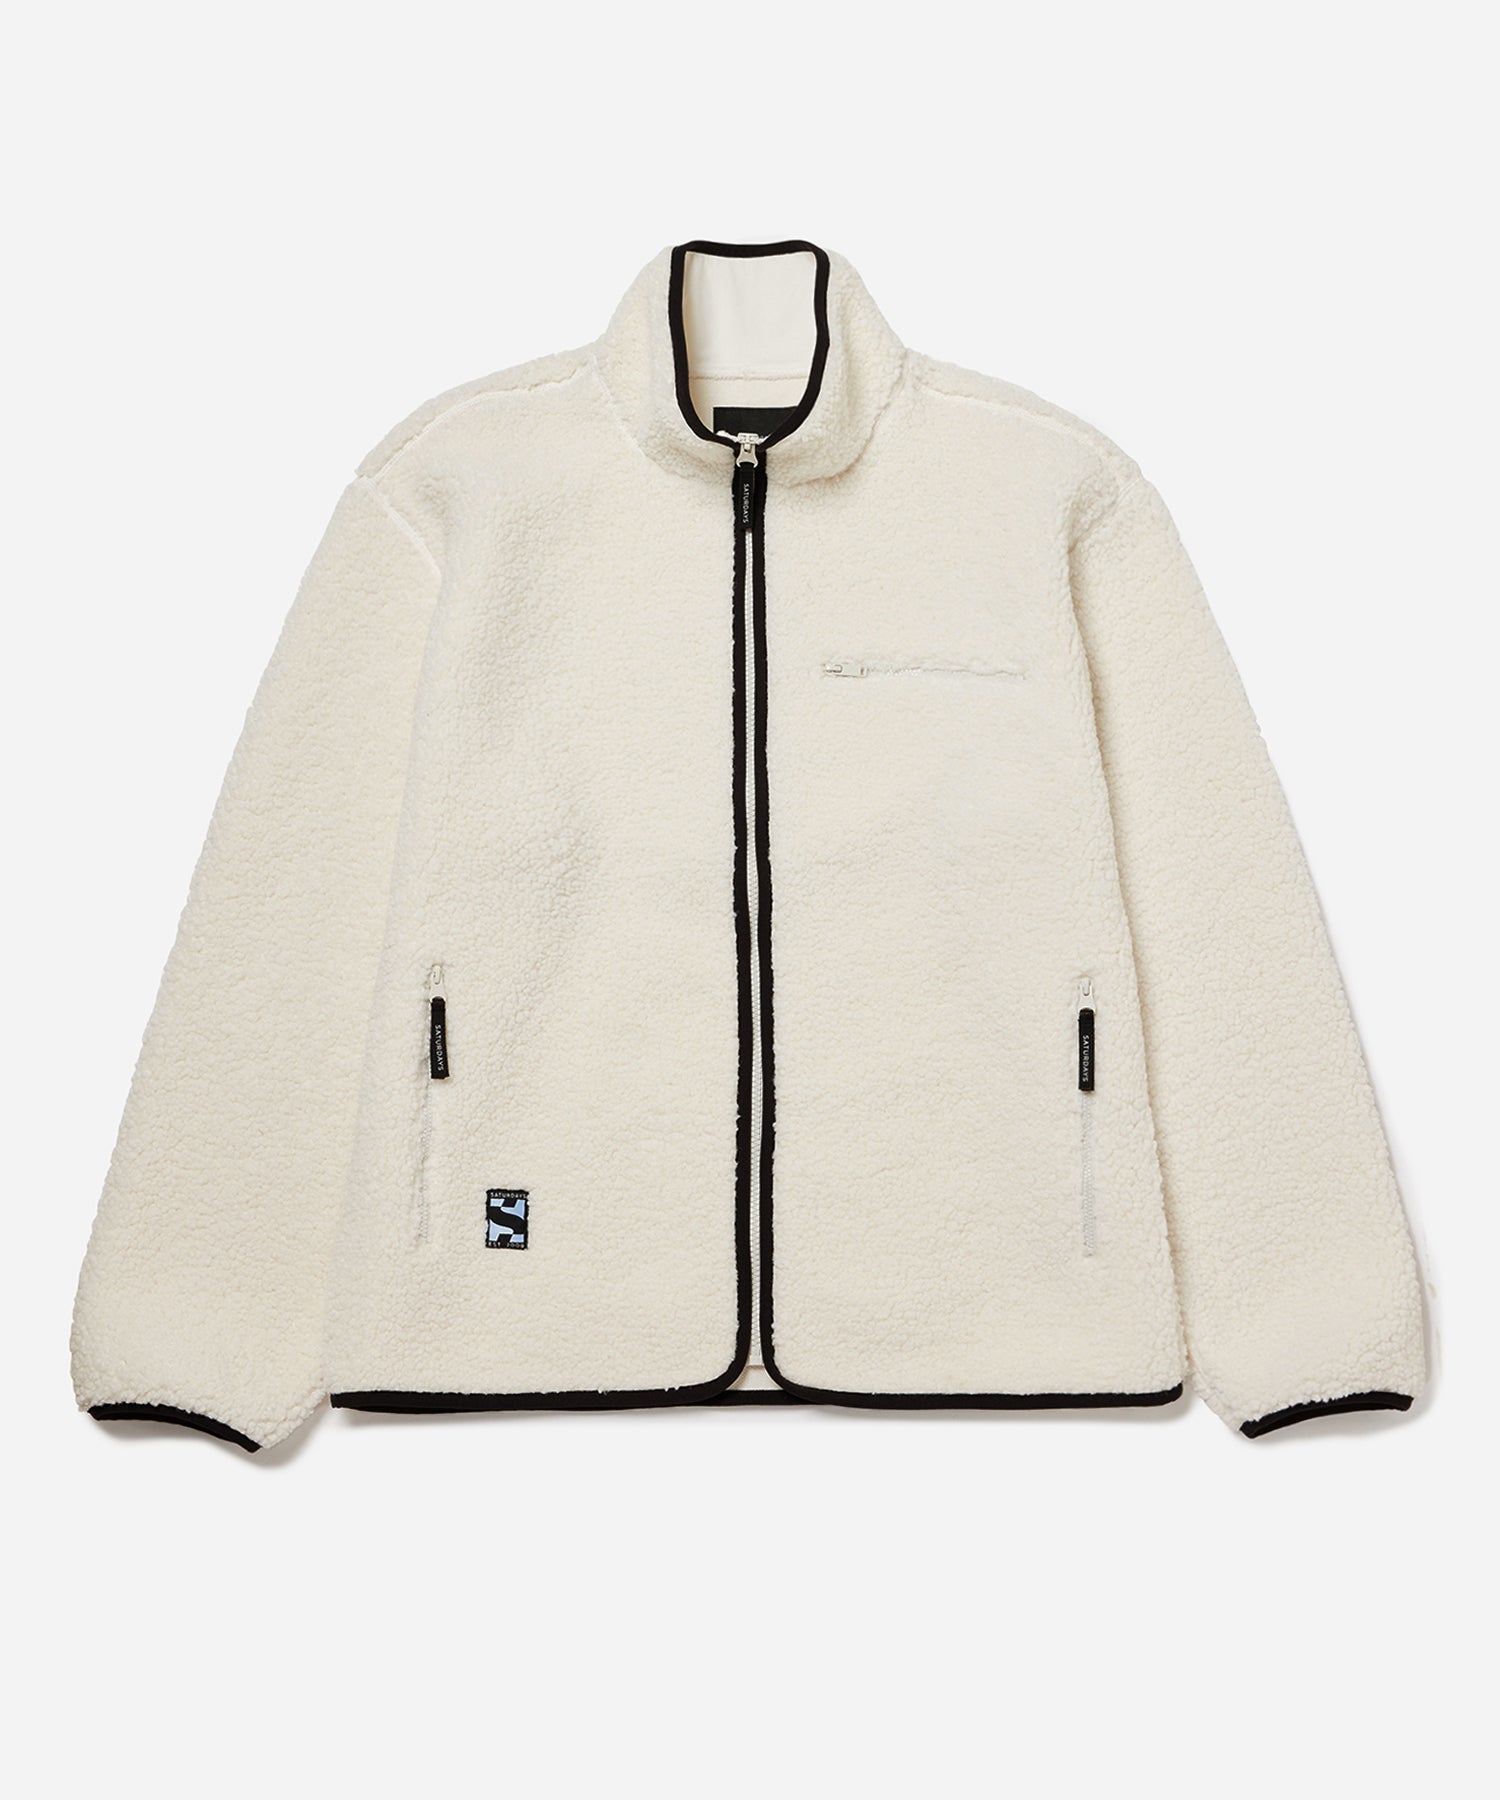 Spencer Polar Fleece Full Zip Jacket